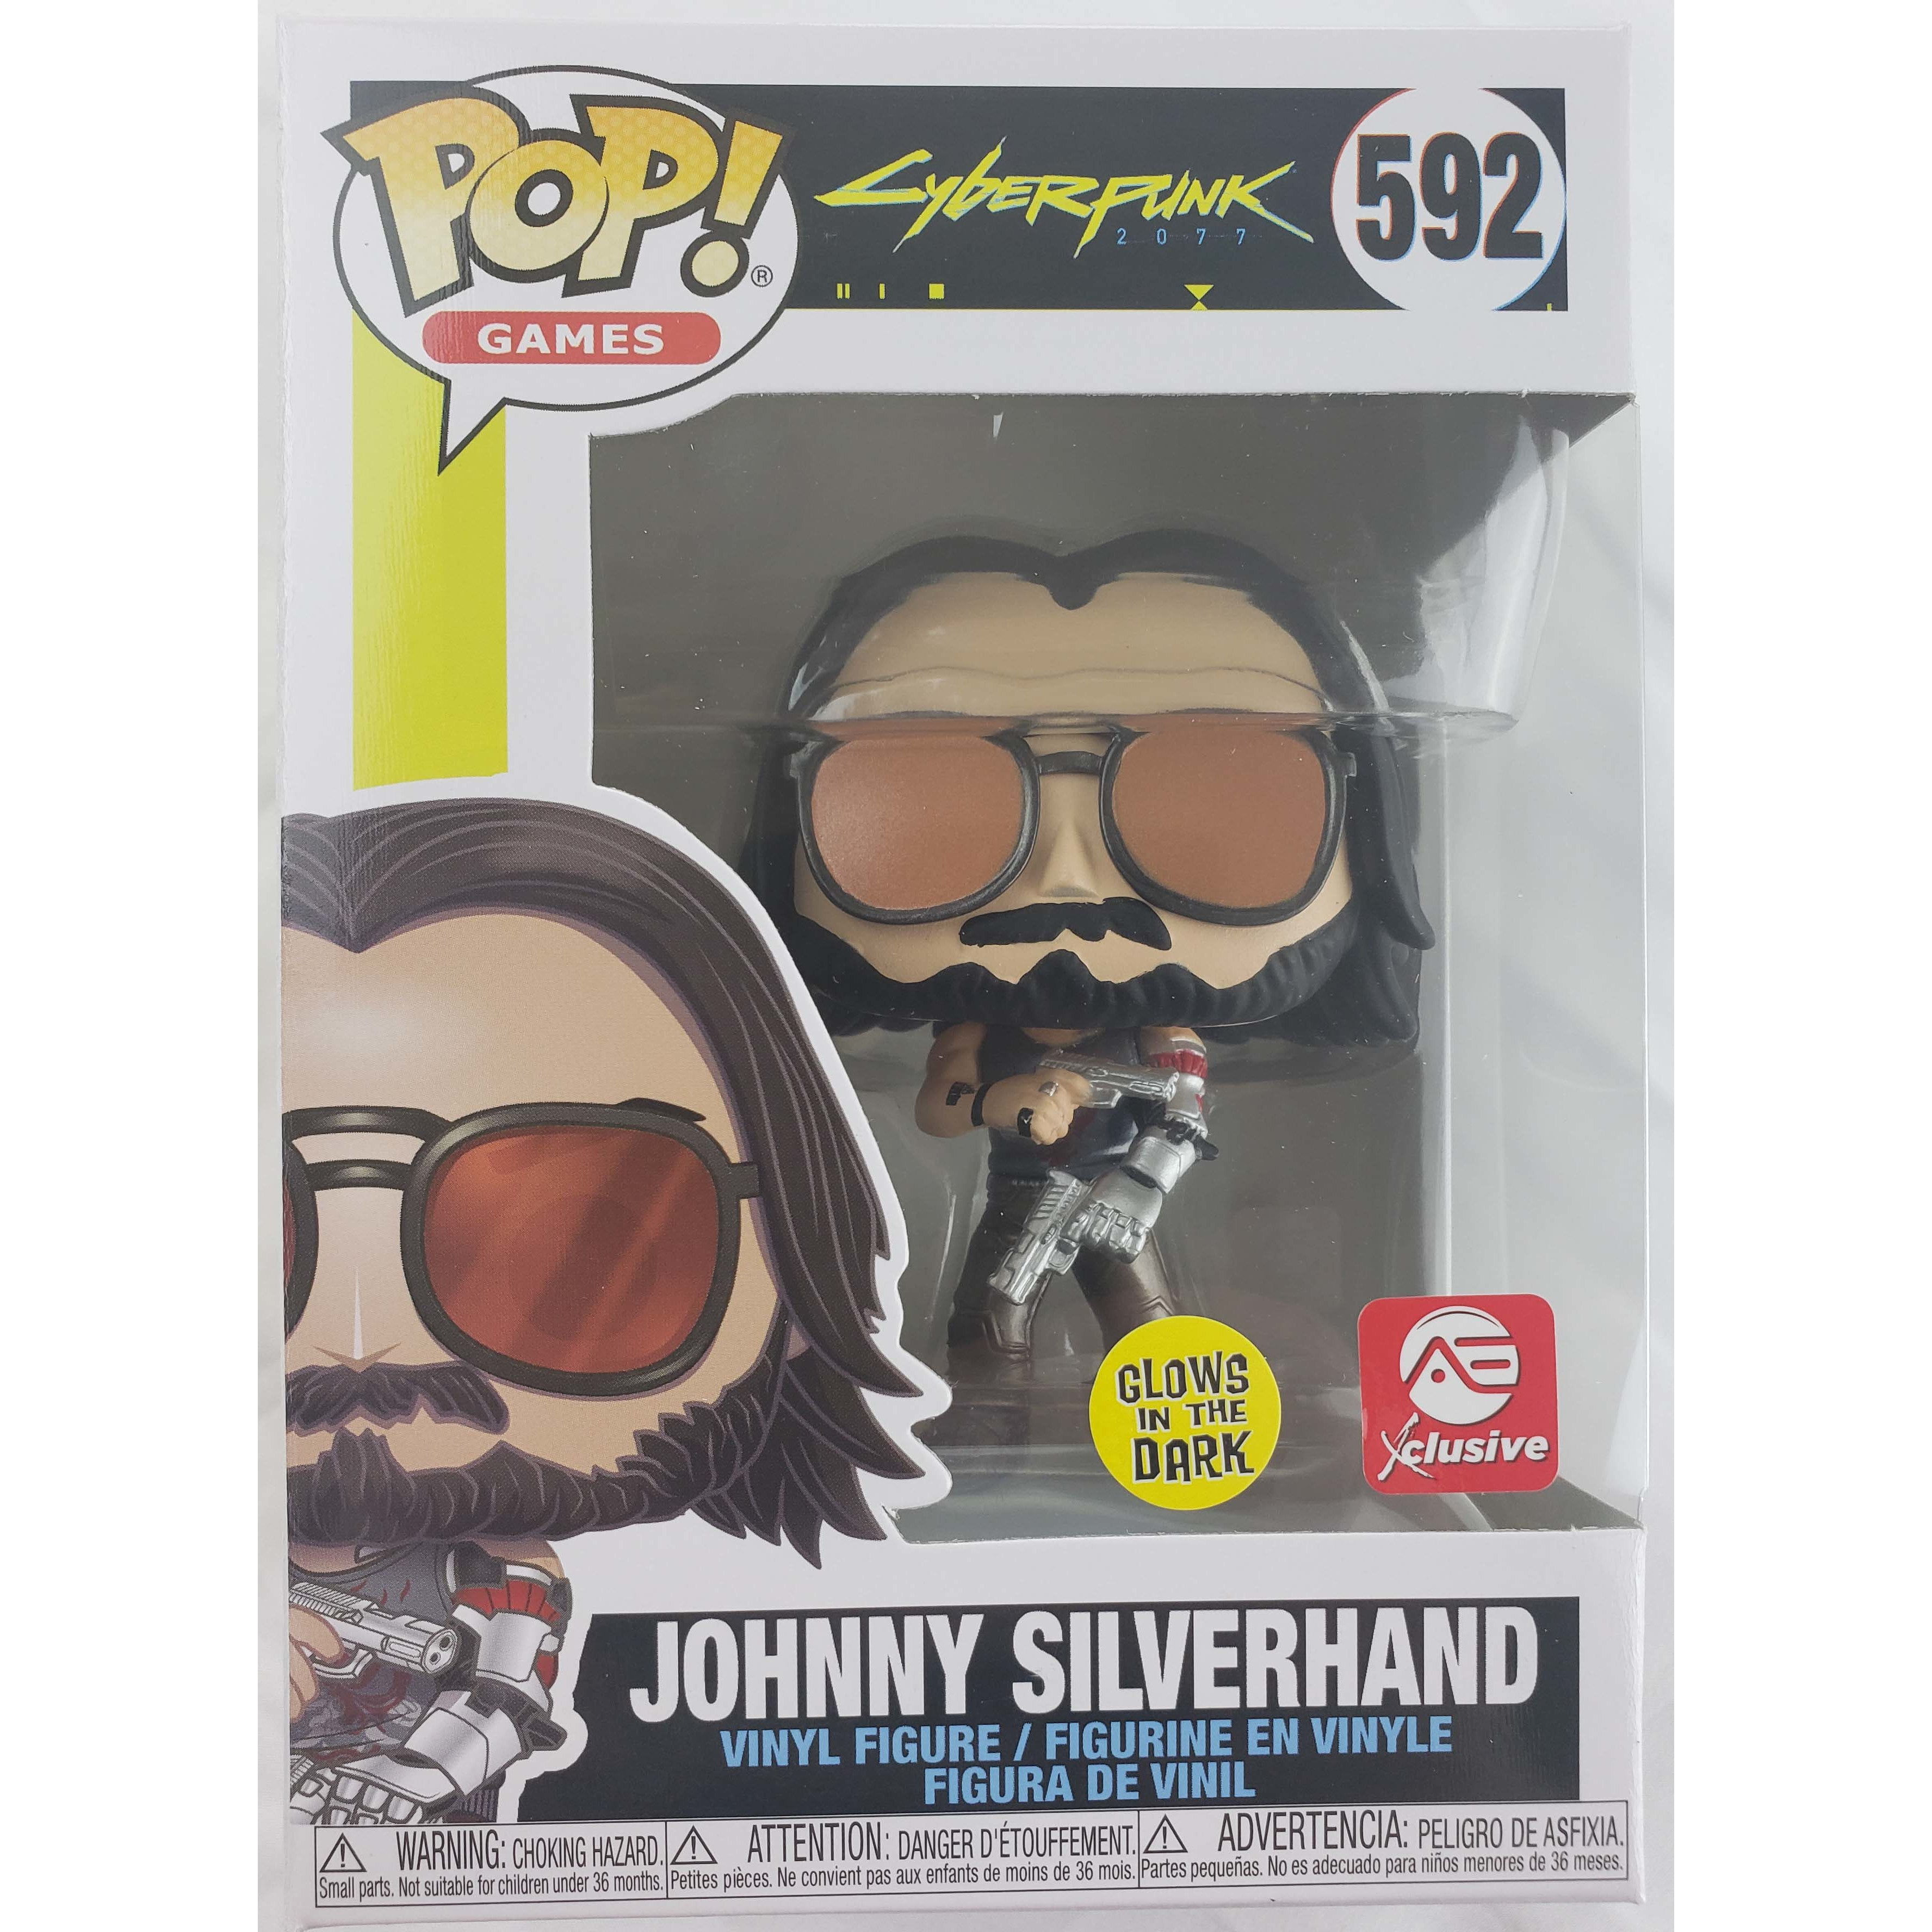 Johnny Silverhand Vinyl Figure for sale online Games: Cyberpunk 2077 with Sunglasses Funko Pop